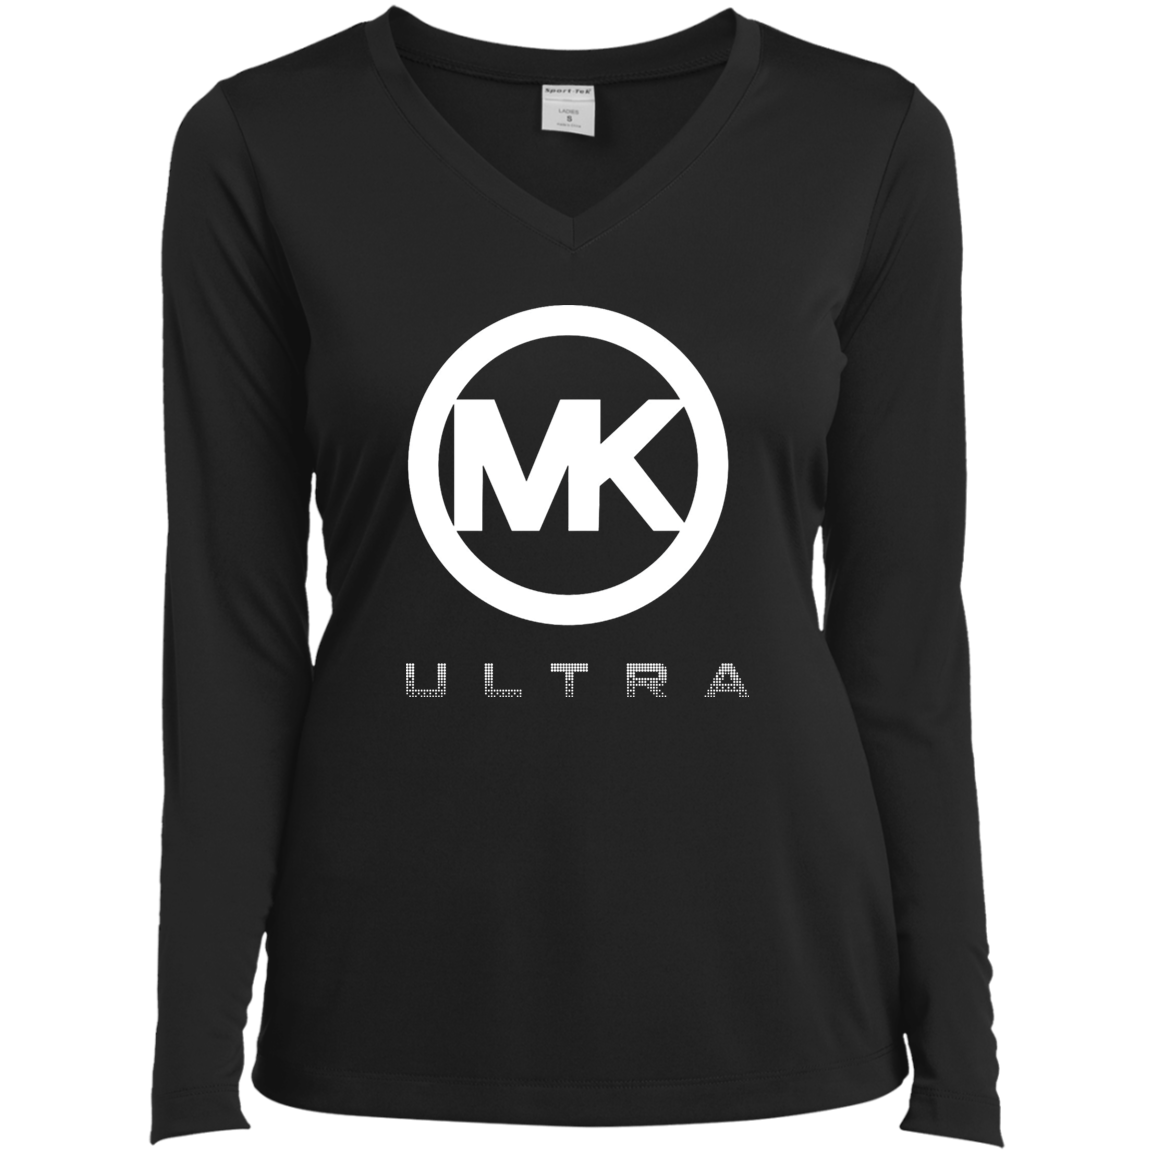 "MK Ultra" Ladies’ Long Sleeve V-Neck Tee